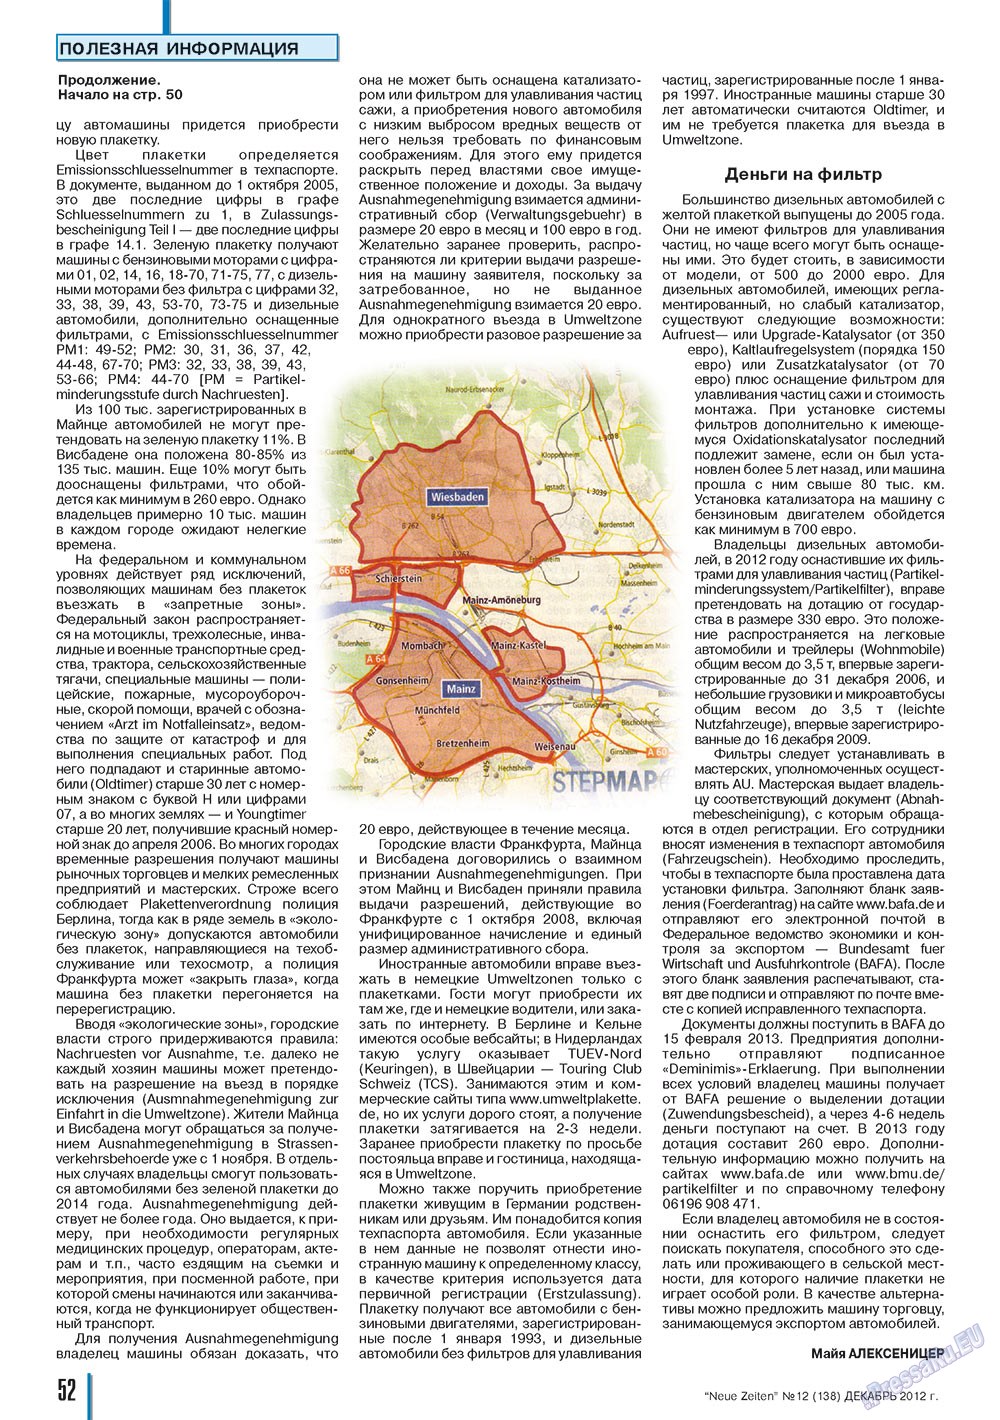 Neue Zeiten (журнал). 2012 год, номер 12, стр. 52